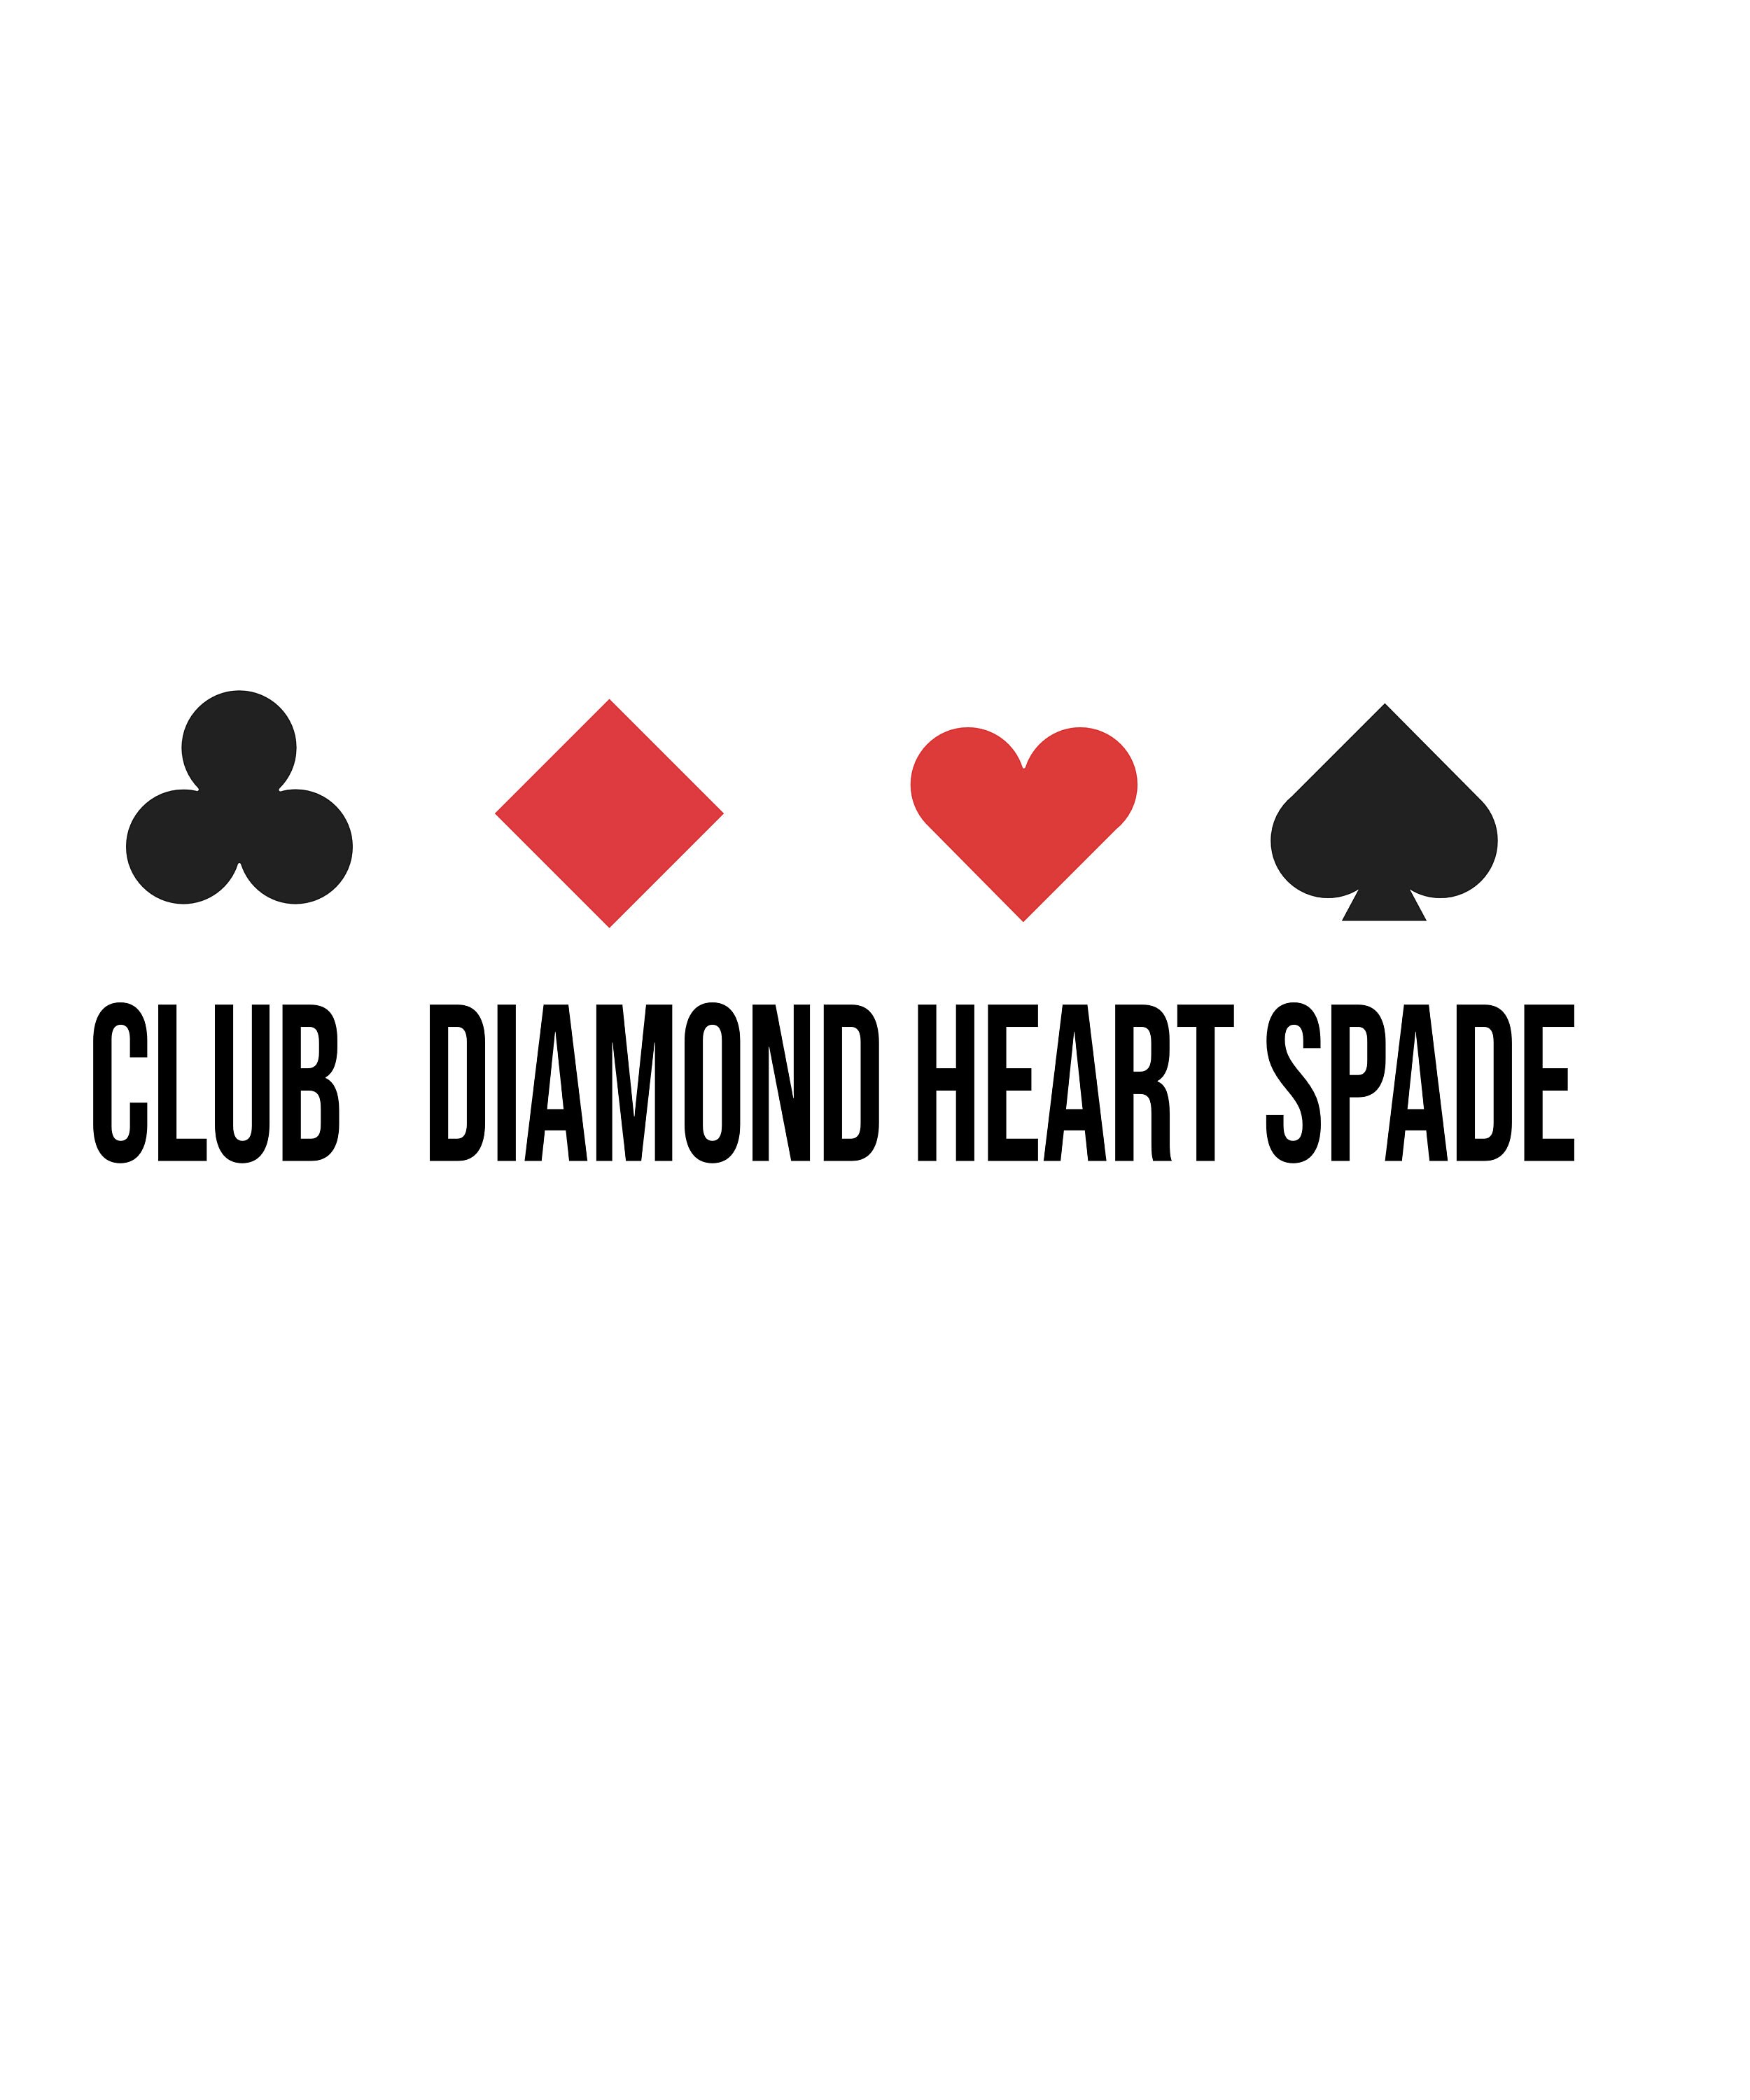 Card spade heart diamond club